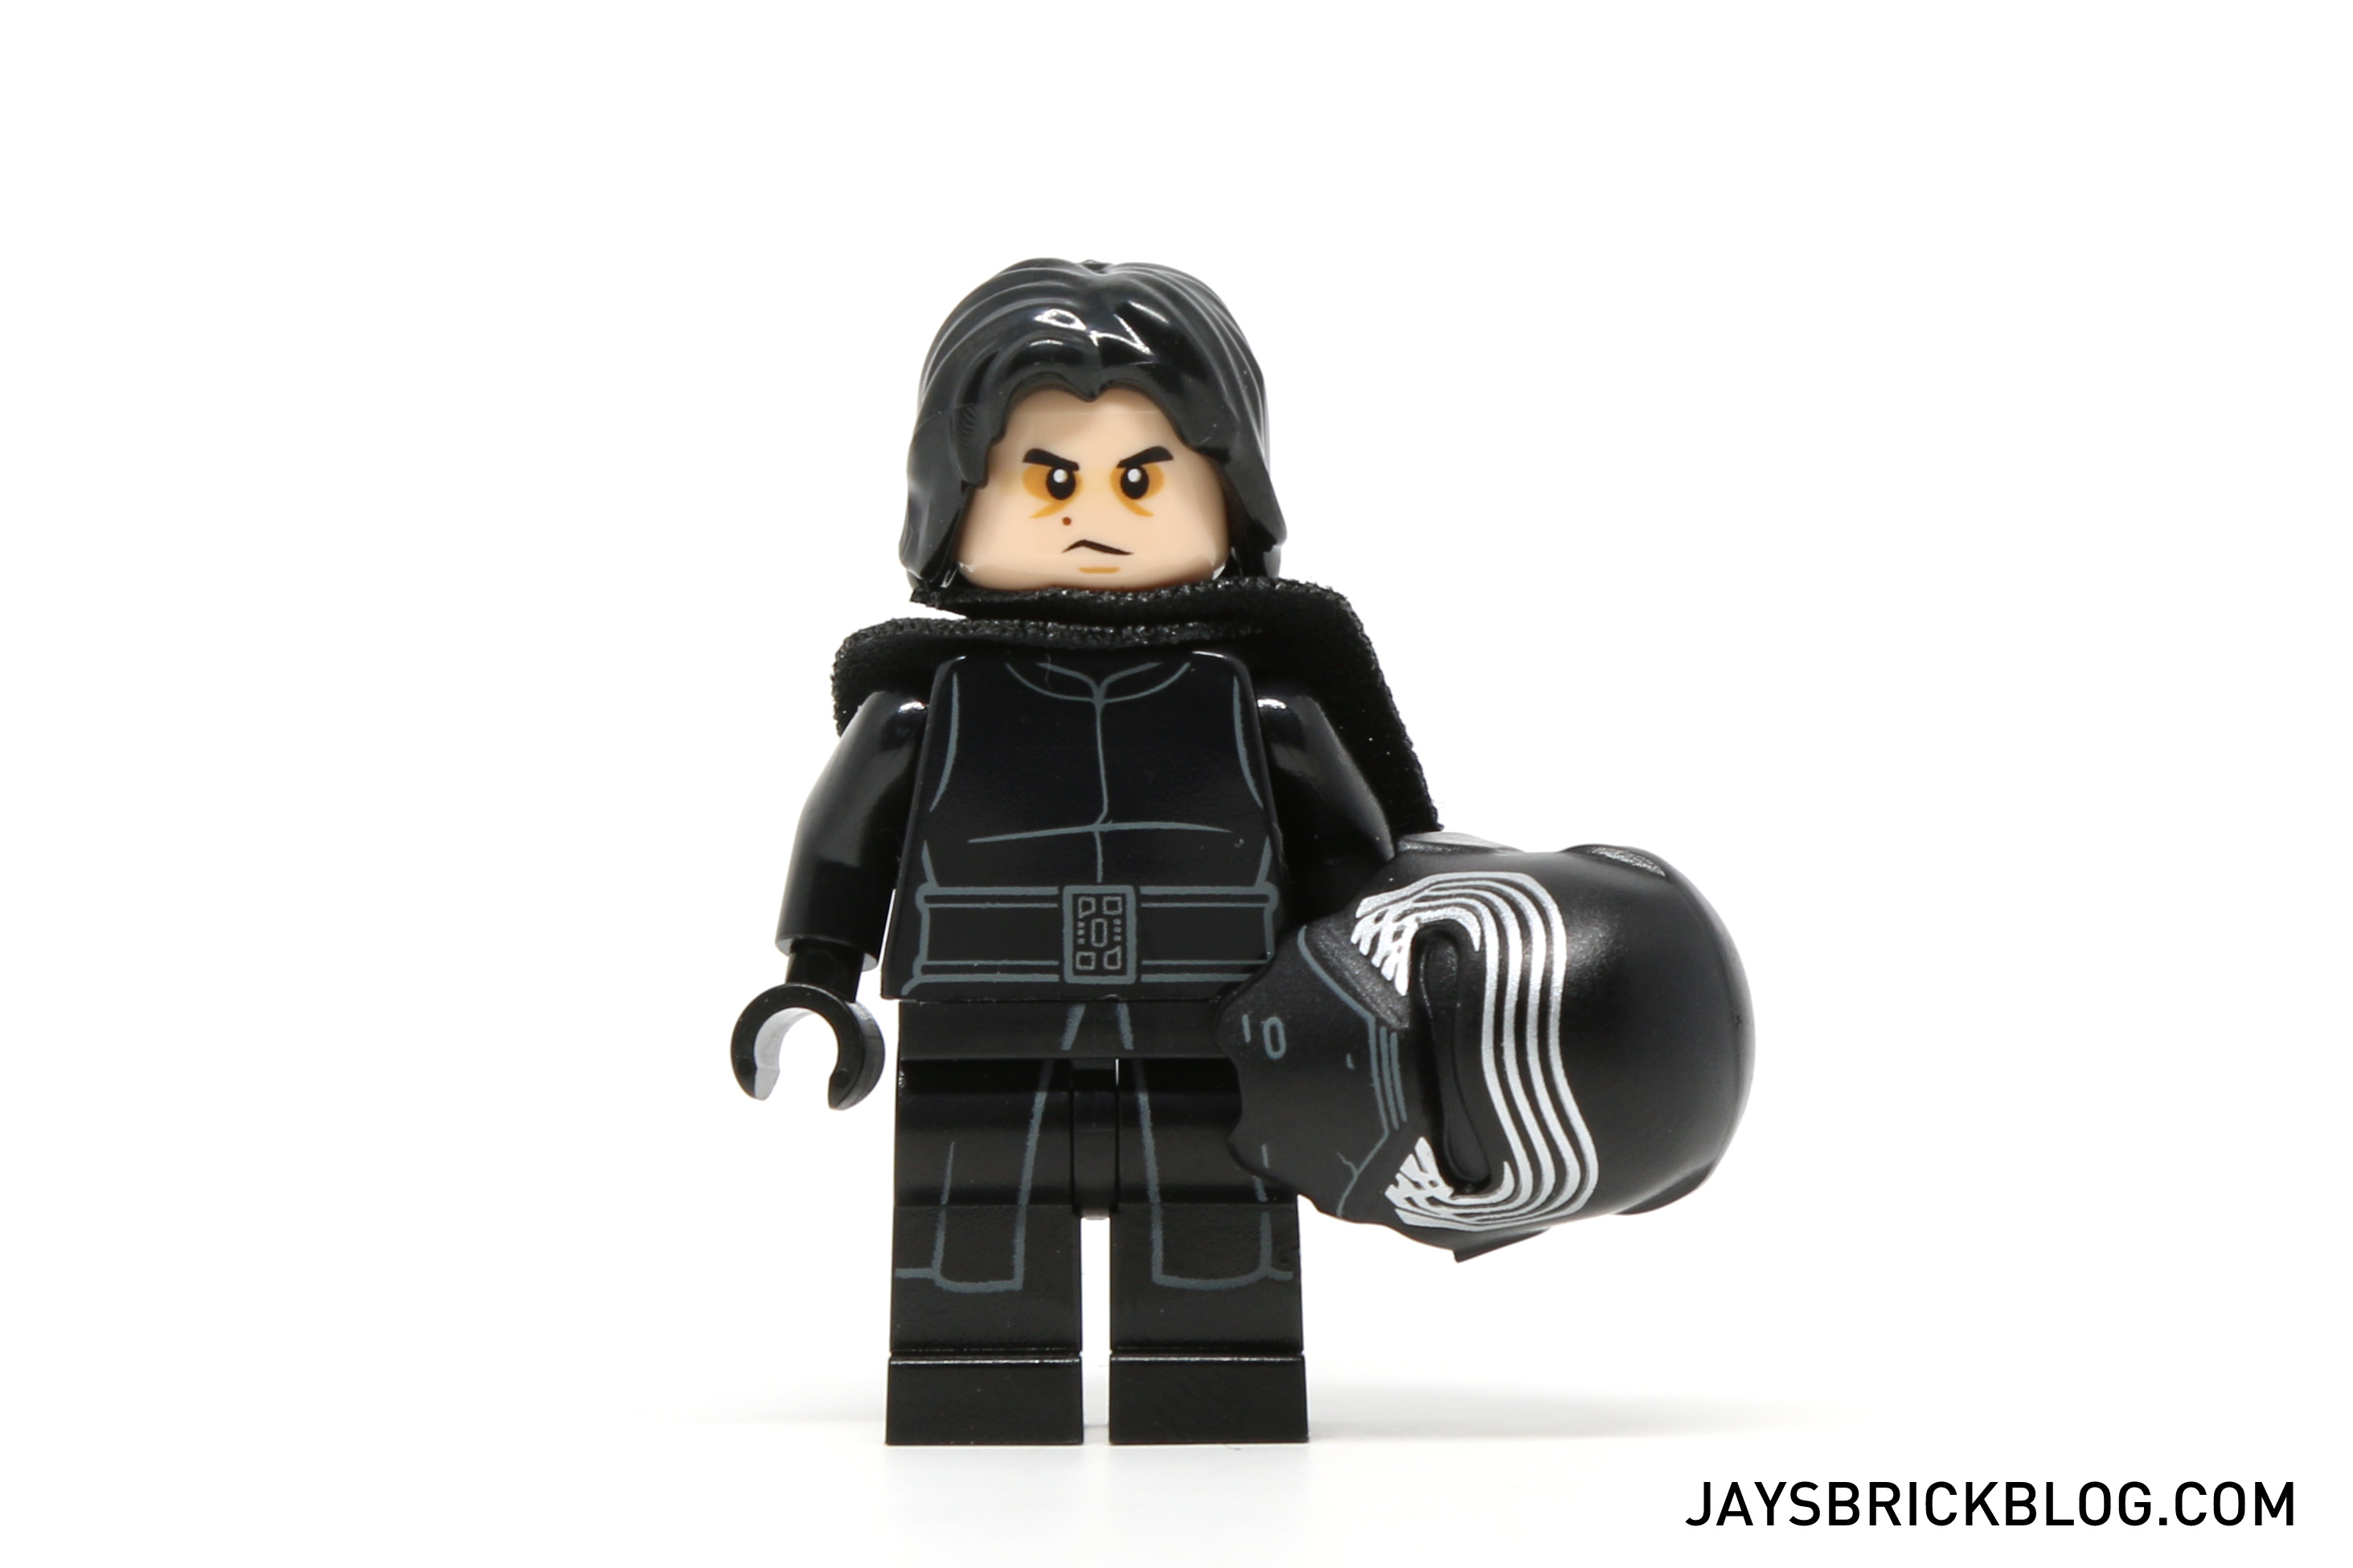 NEW Lego Star Wars MAZ KANATA minifigure Set 75139 